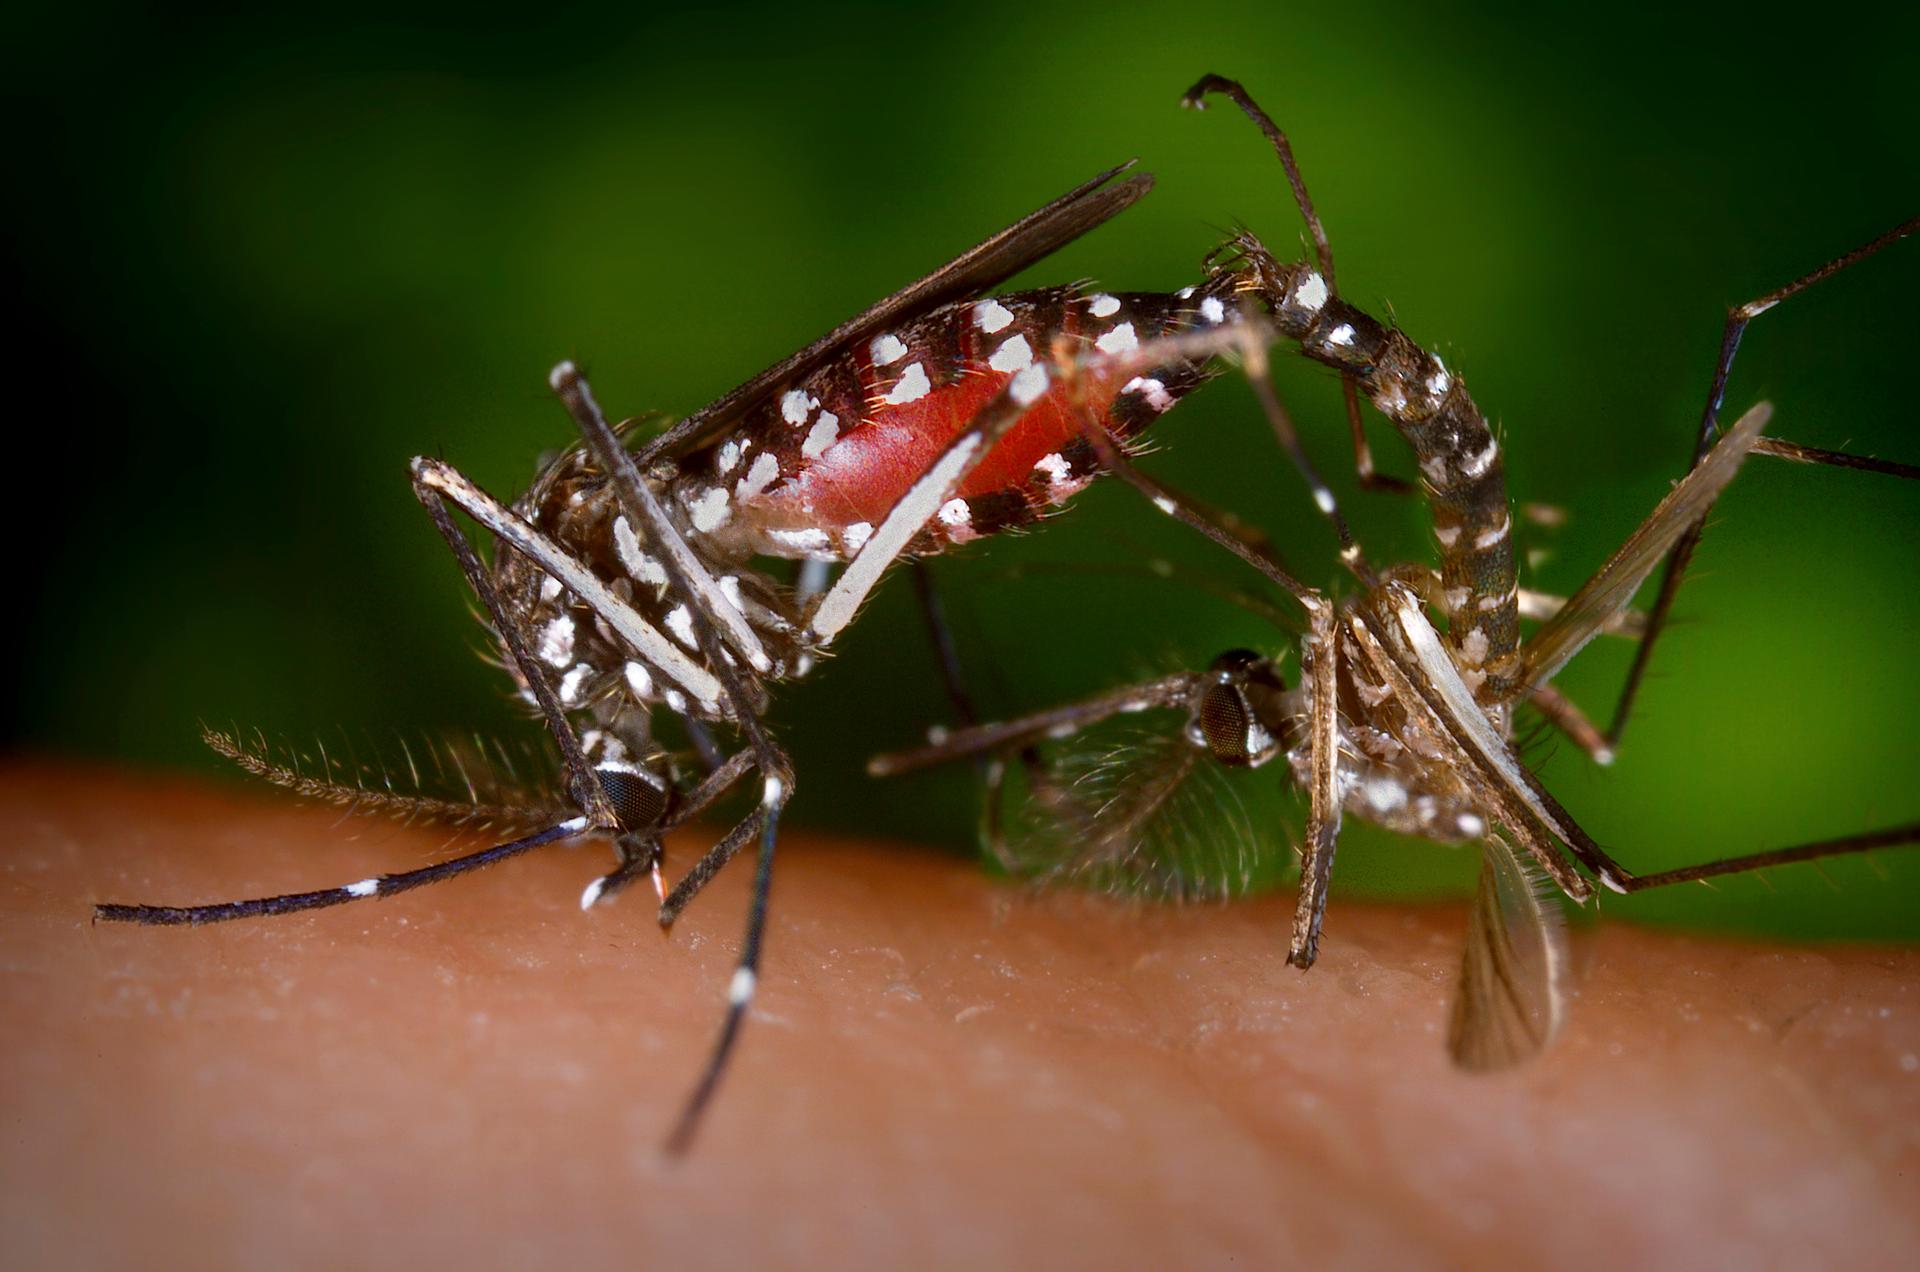 A pair of Aedes albopictus mosquitoes